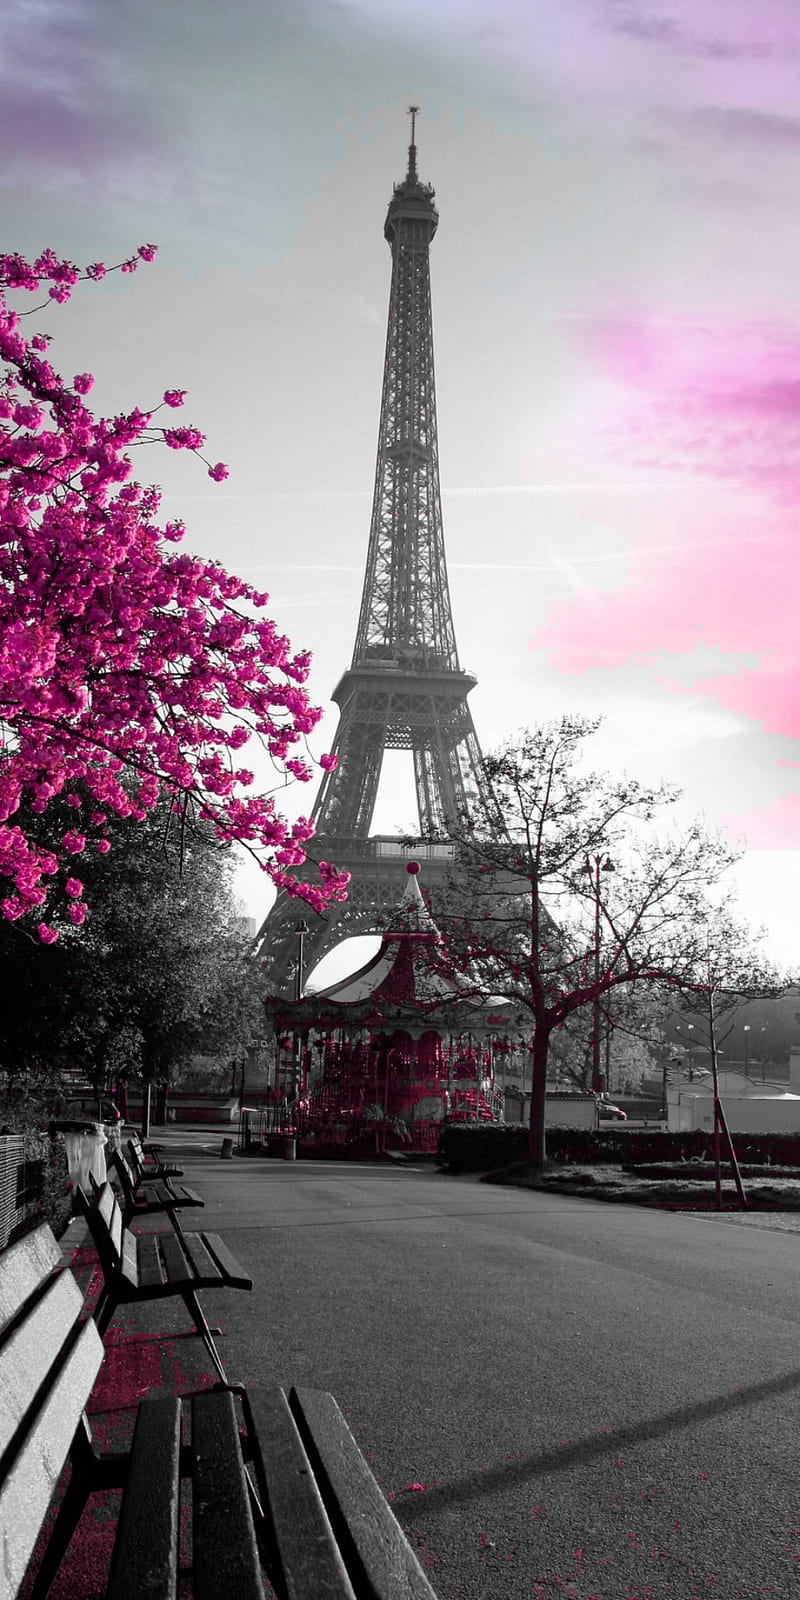 Cute Paris Live Wallpaper APK - Free download app for Android